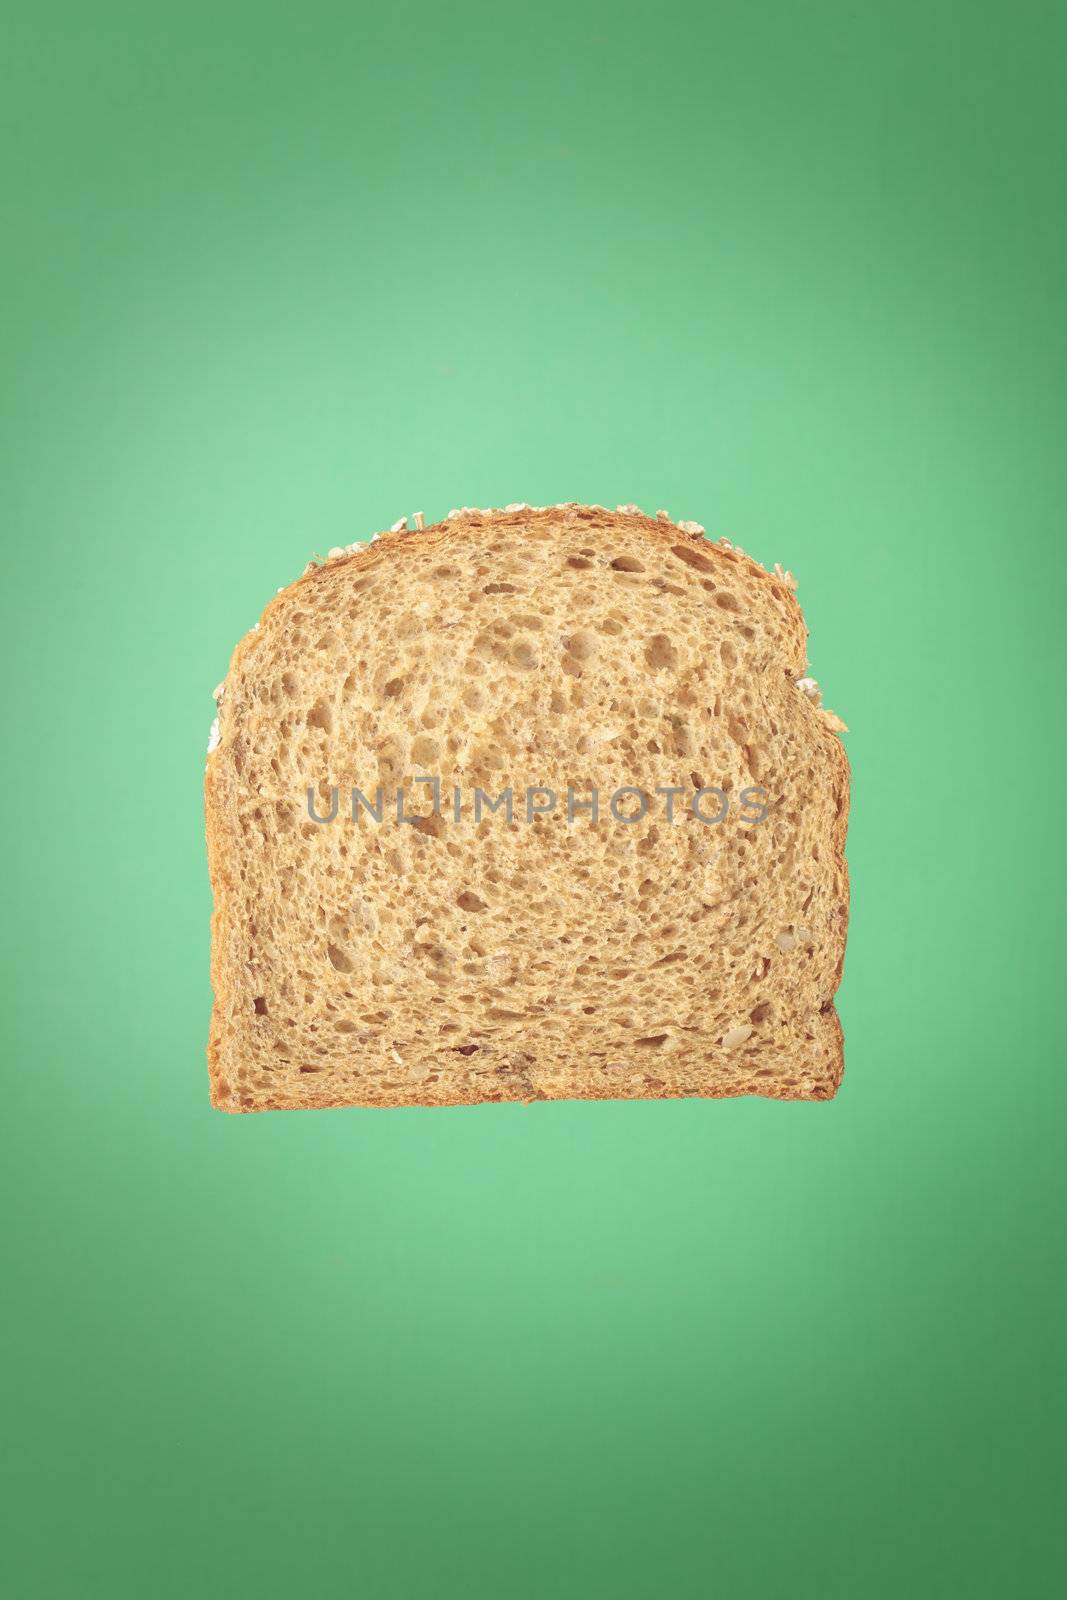 Bread by Stocksnapper